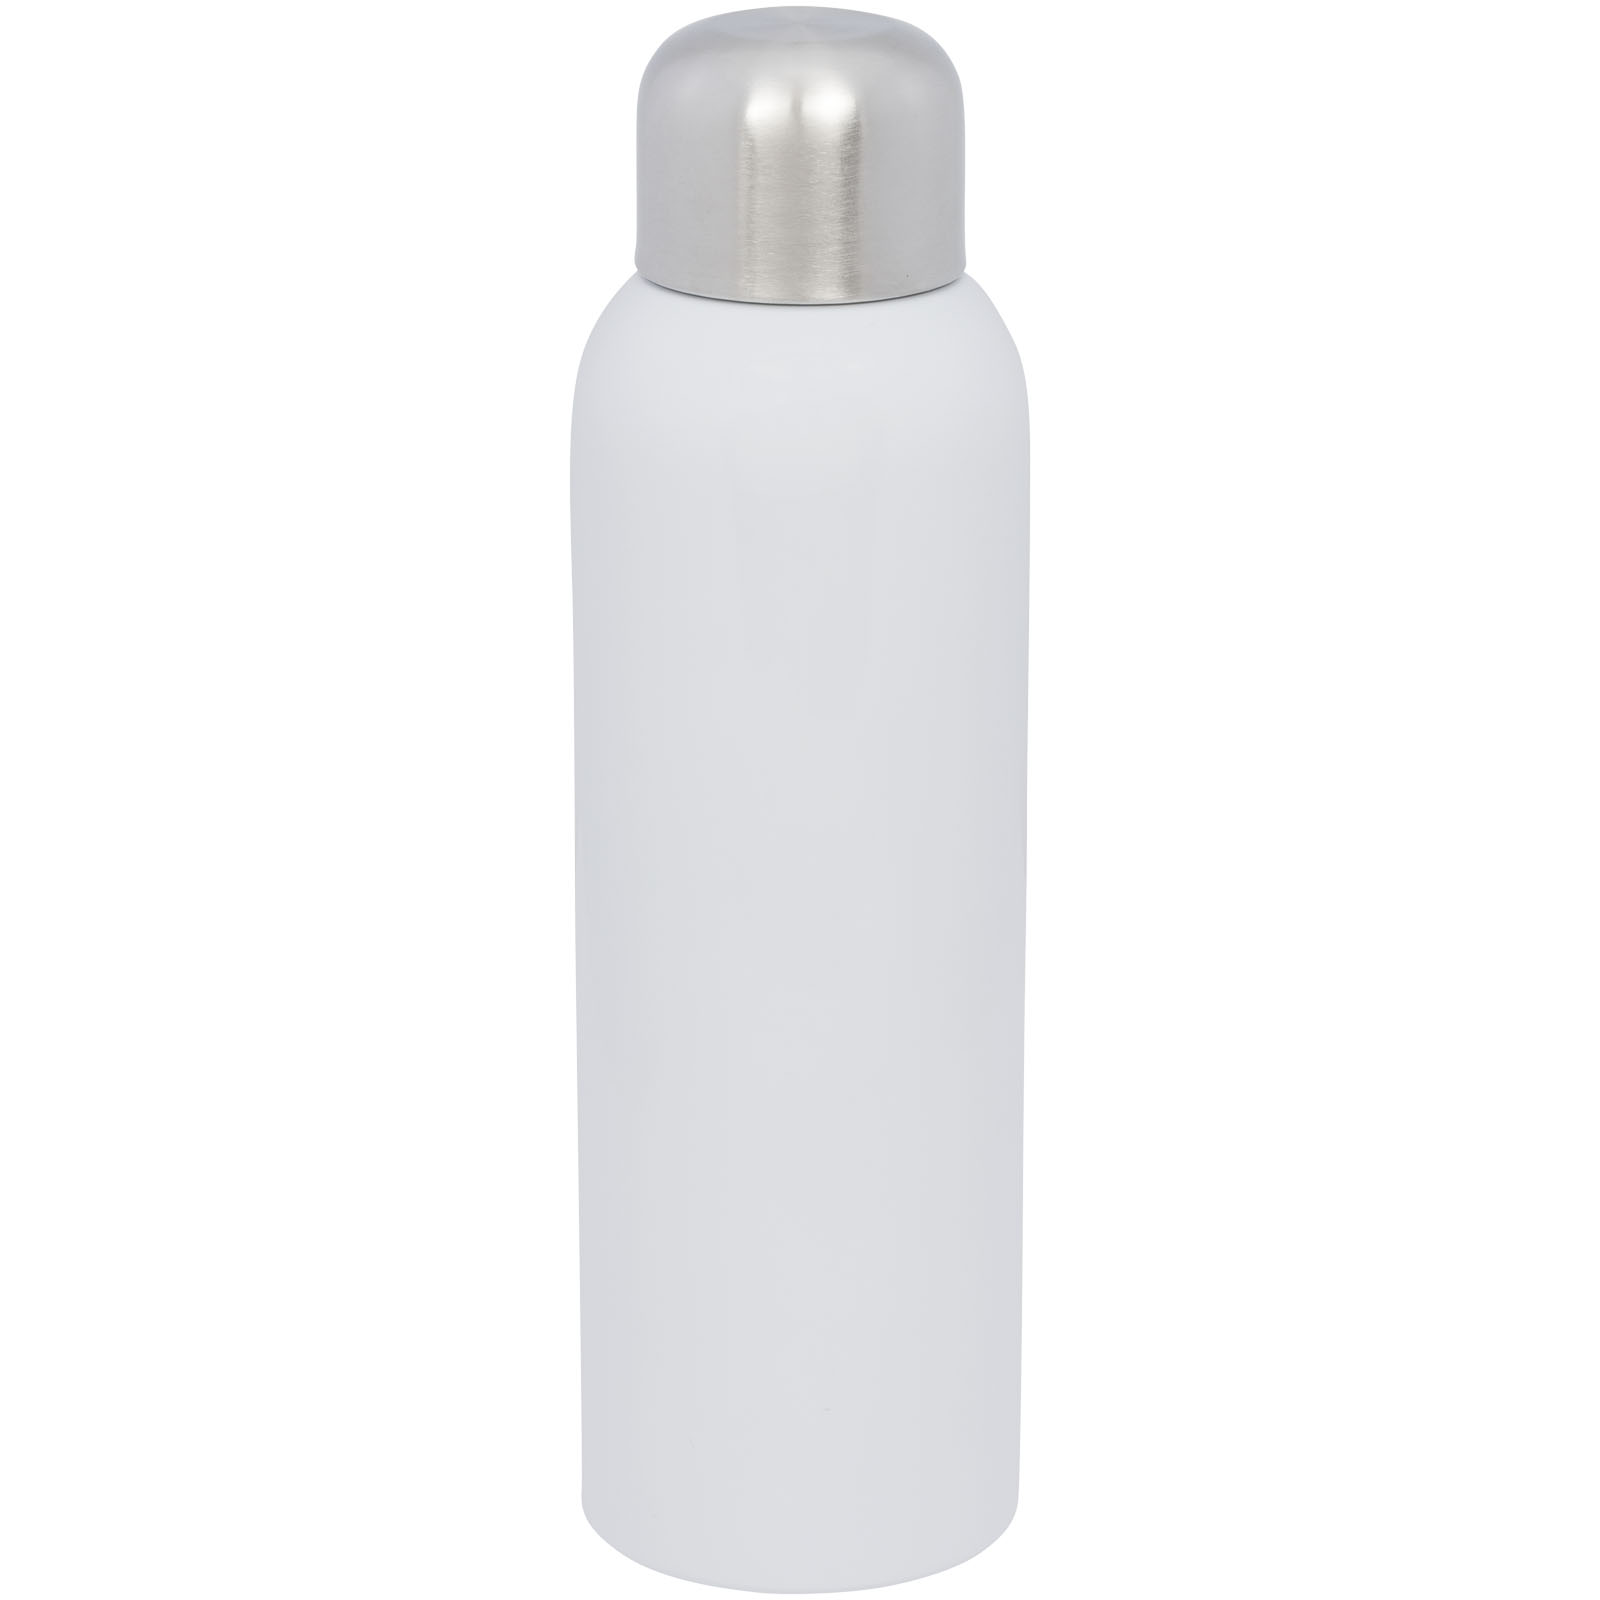 Advertising Water bottles - Guzzle 820 ml RCS certified stainless steel water bottle